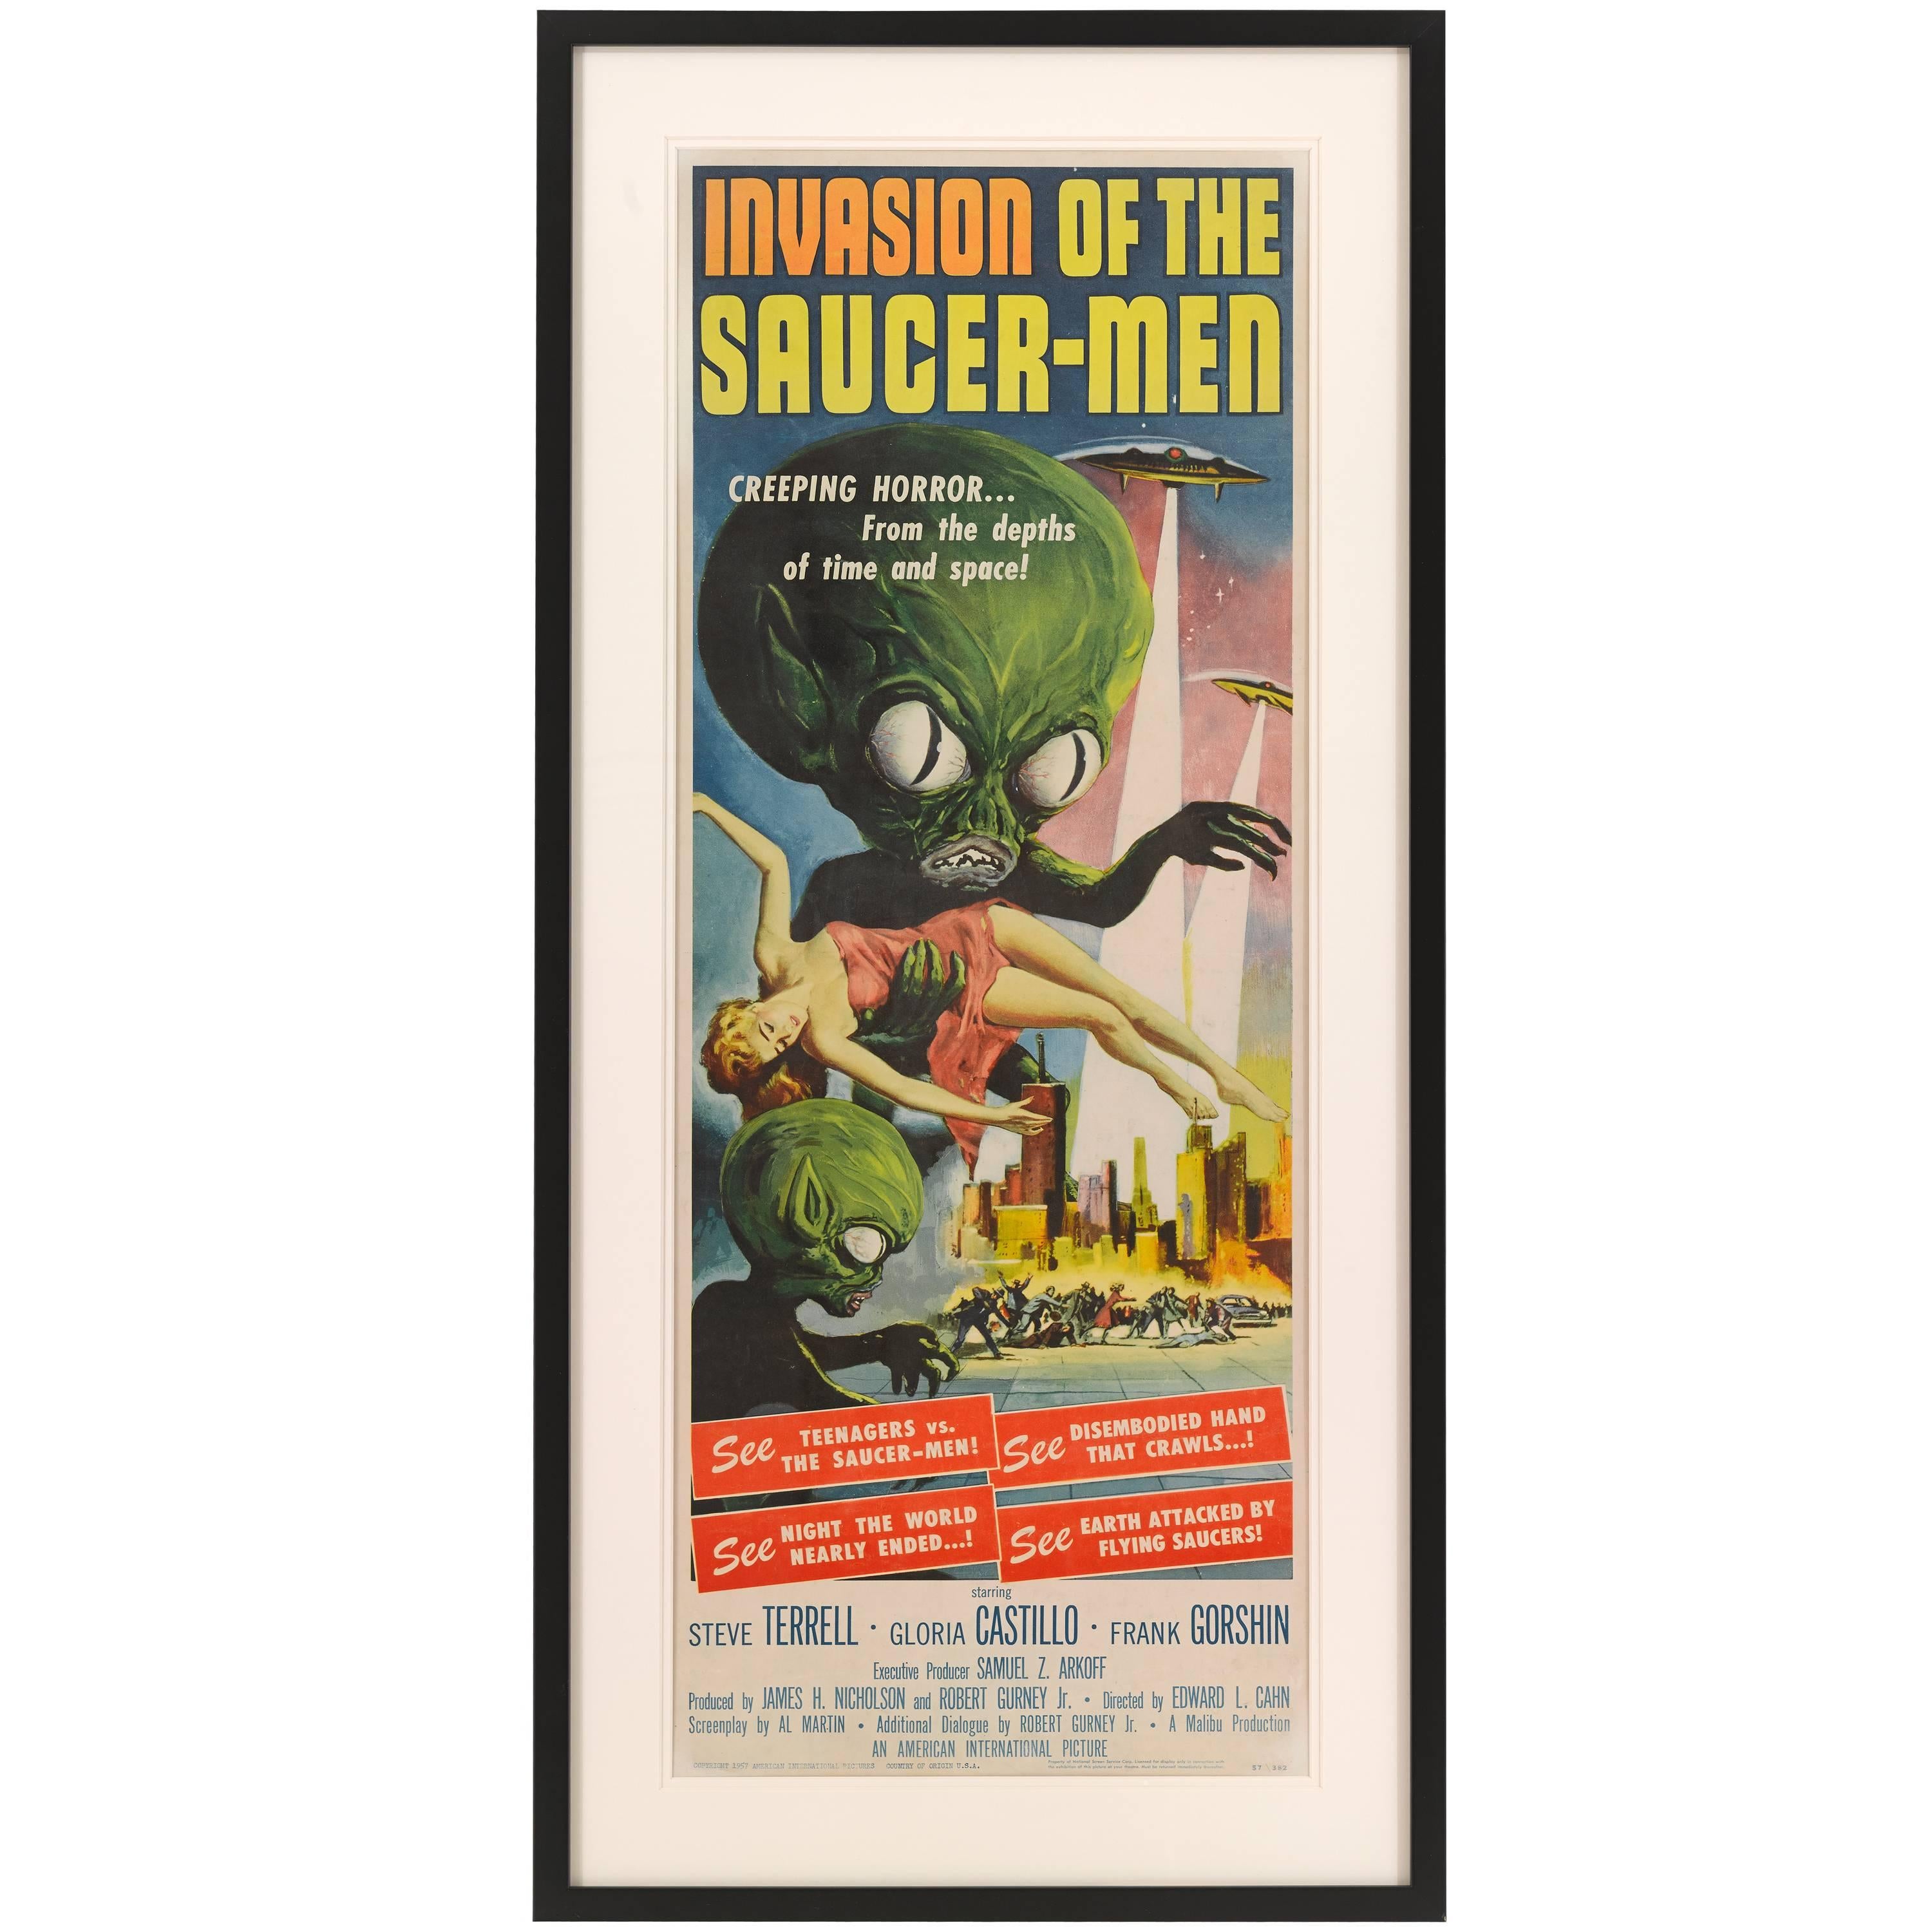 Invasion of the Saucer Men, US film poster